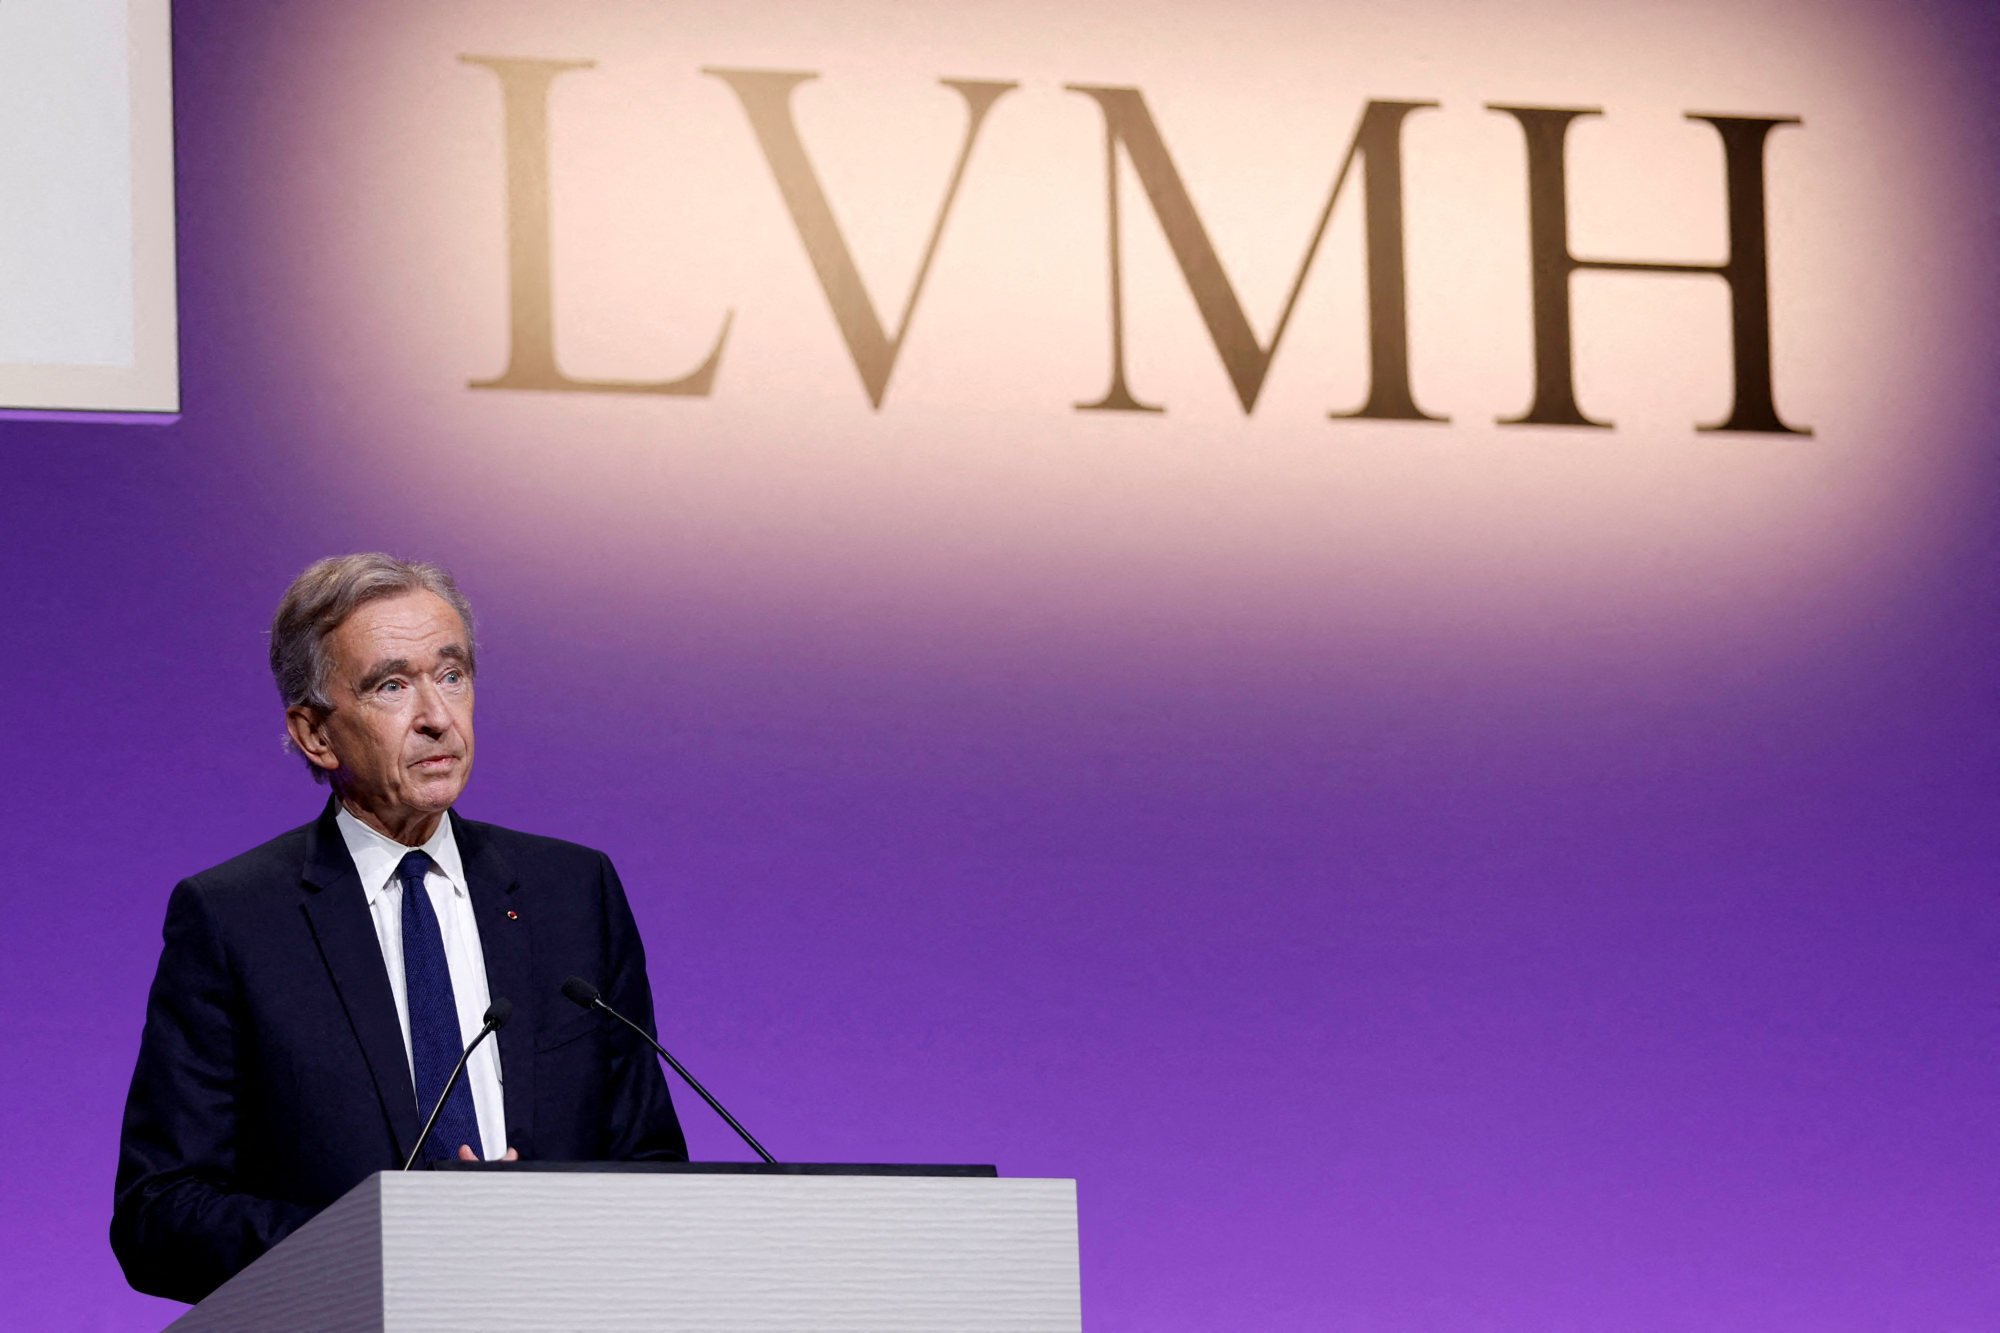 Luxury goods titan LVMH makes moves along Billionaires' Row